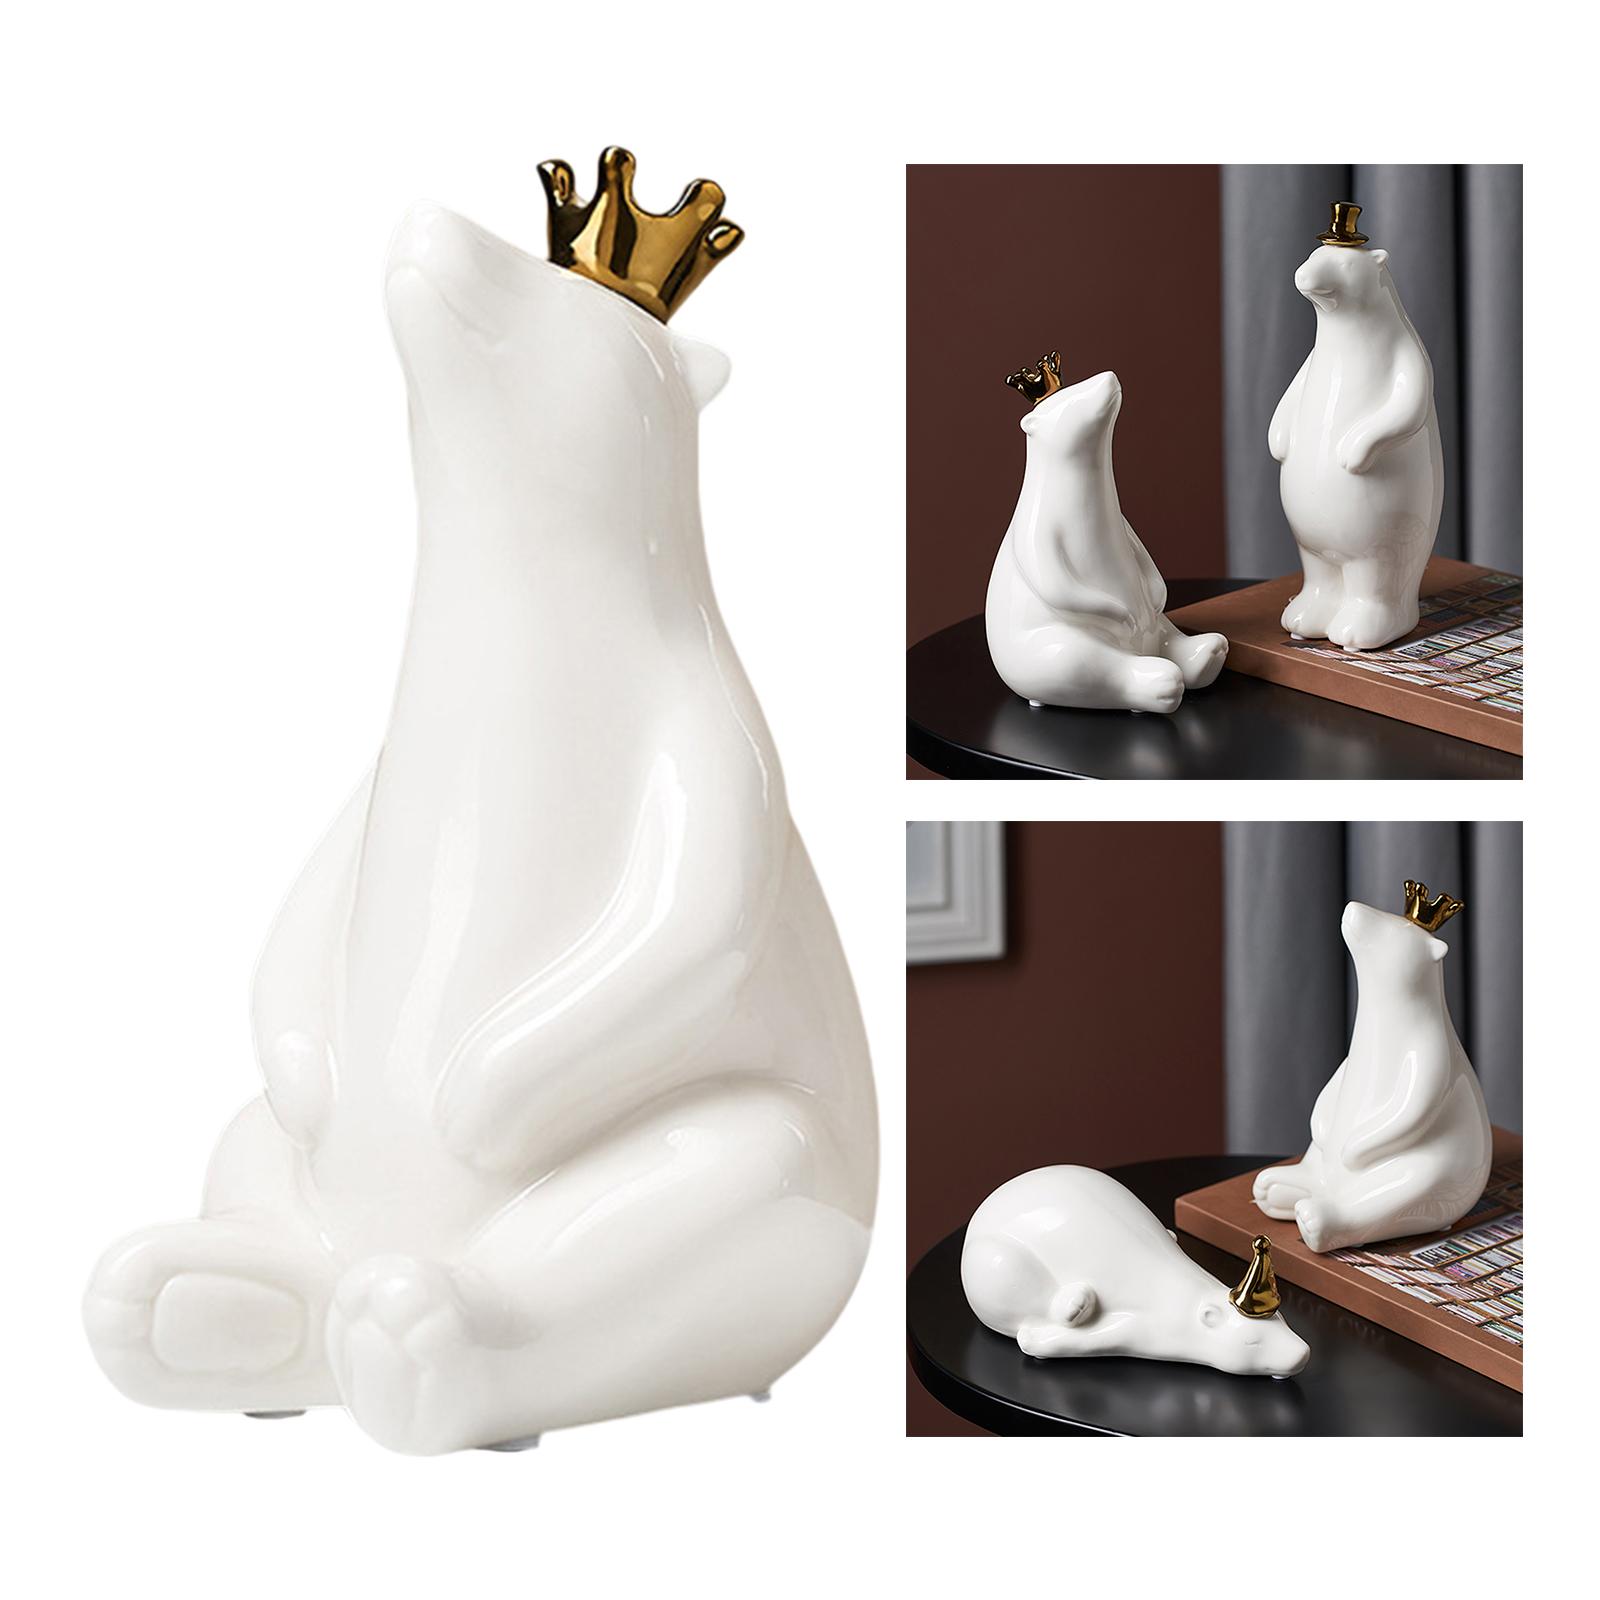 Cute Polar Bear Figurine Sculpture Art Home Tabletop Decor White Sit Bear